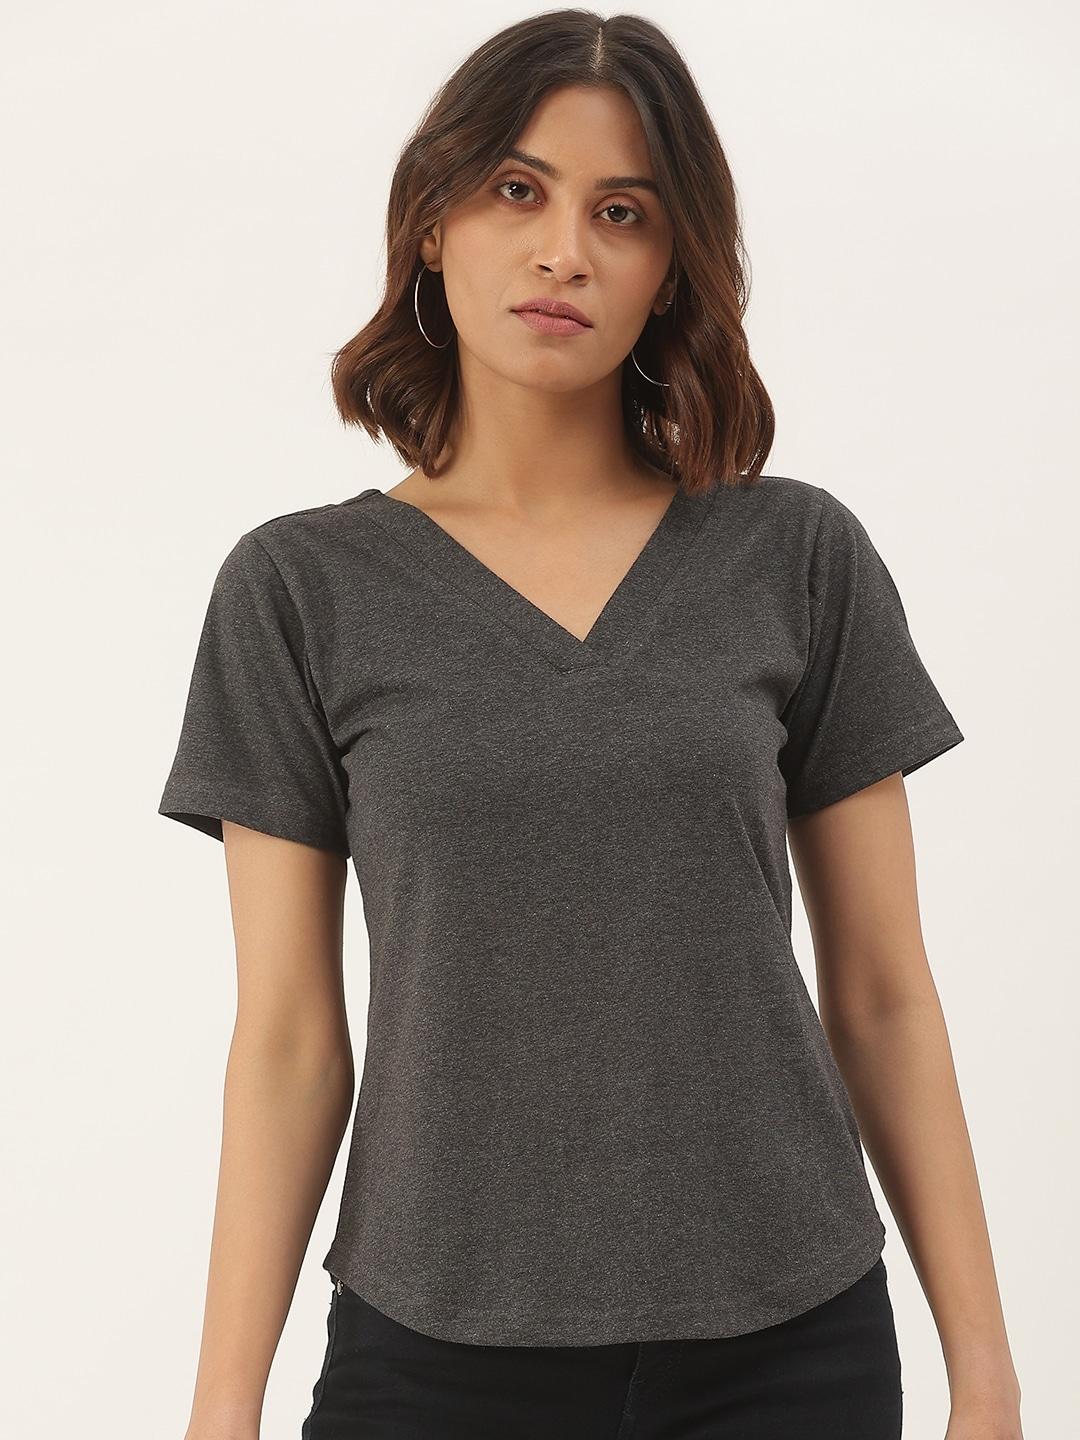 brinns-women-charcoal-grey-v-neck-cotton-t-shirt